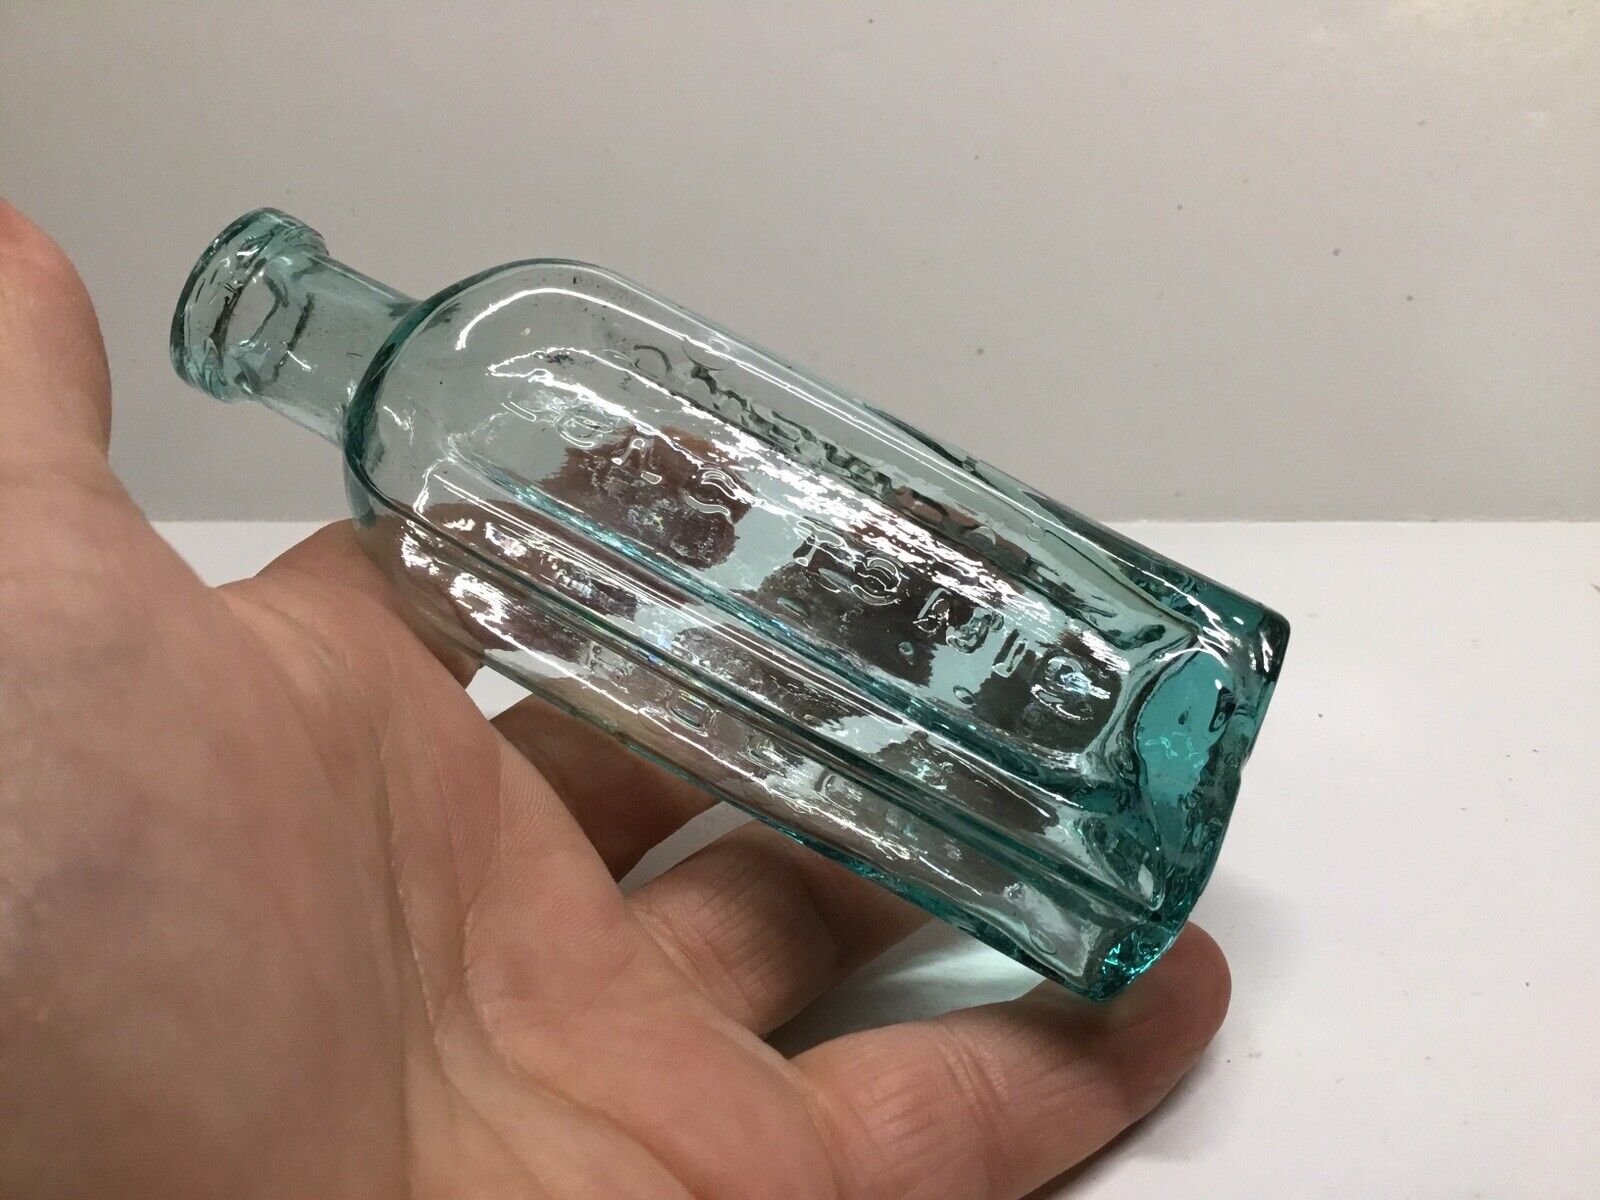 Antique Aqua Colored Lung Tonic Medicine Bottle.